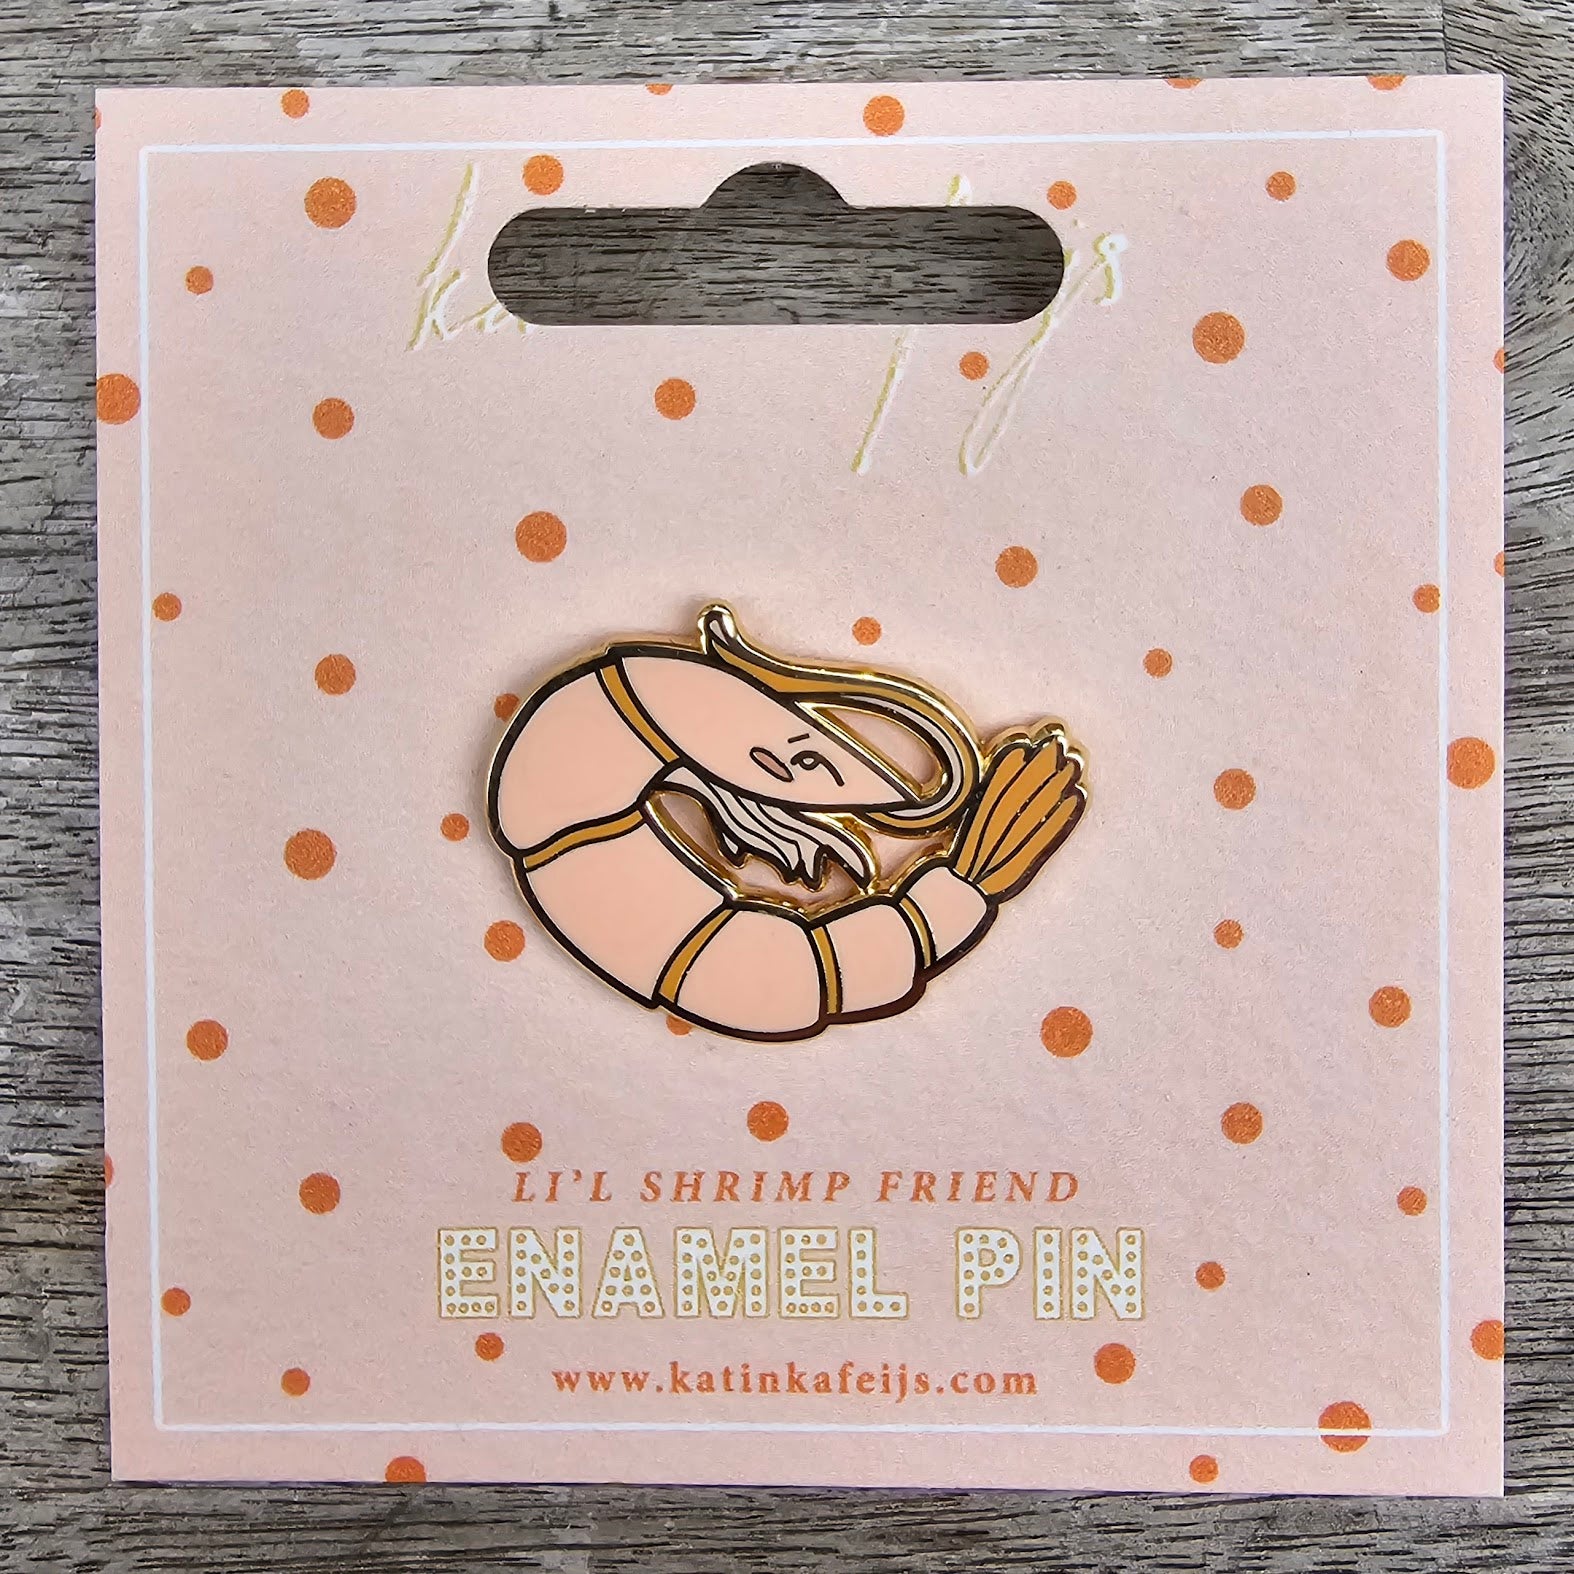 Shrimp pin